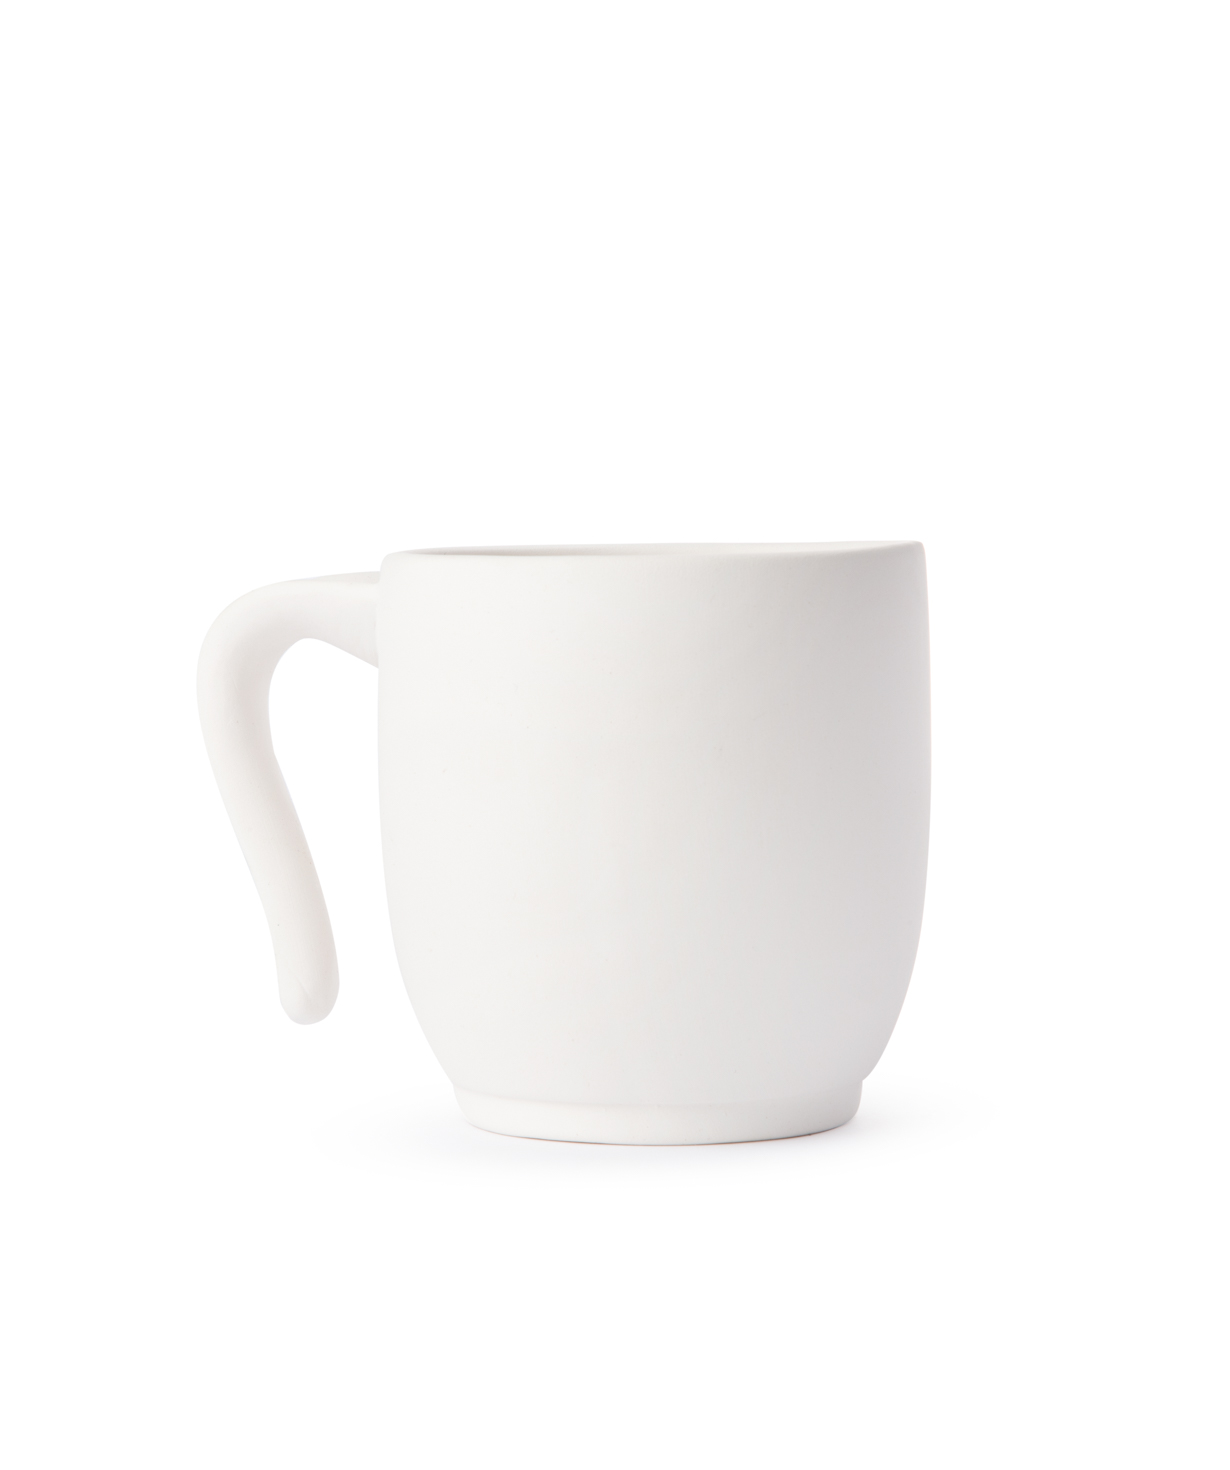 Collection `Yes Republic` art, mug